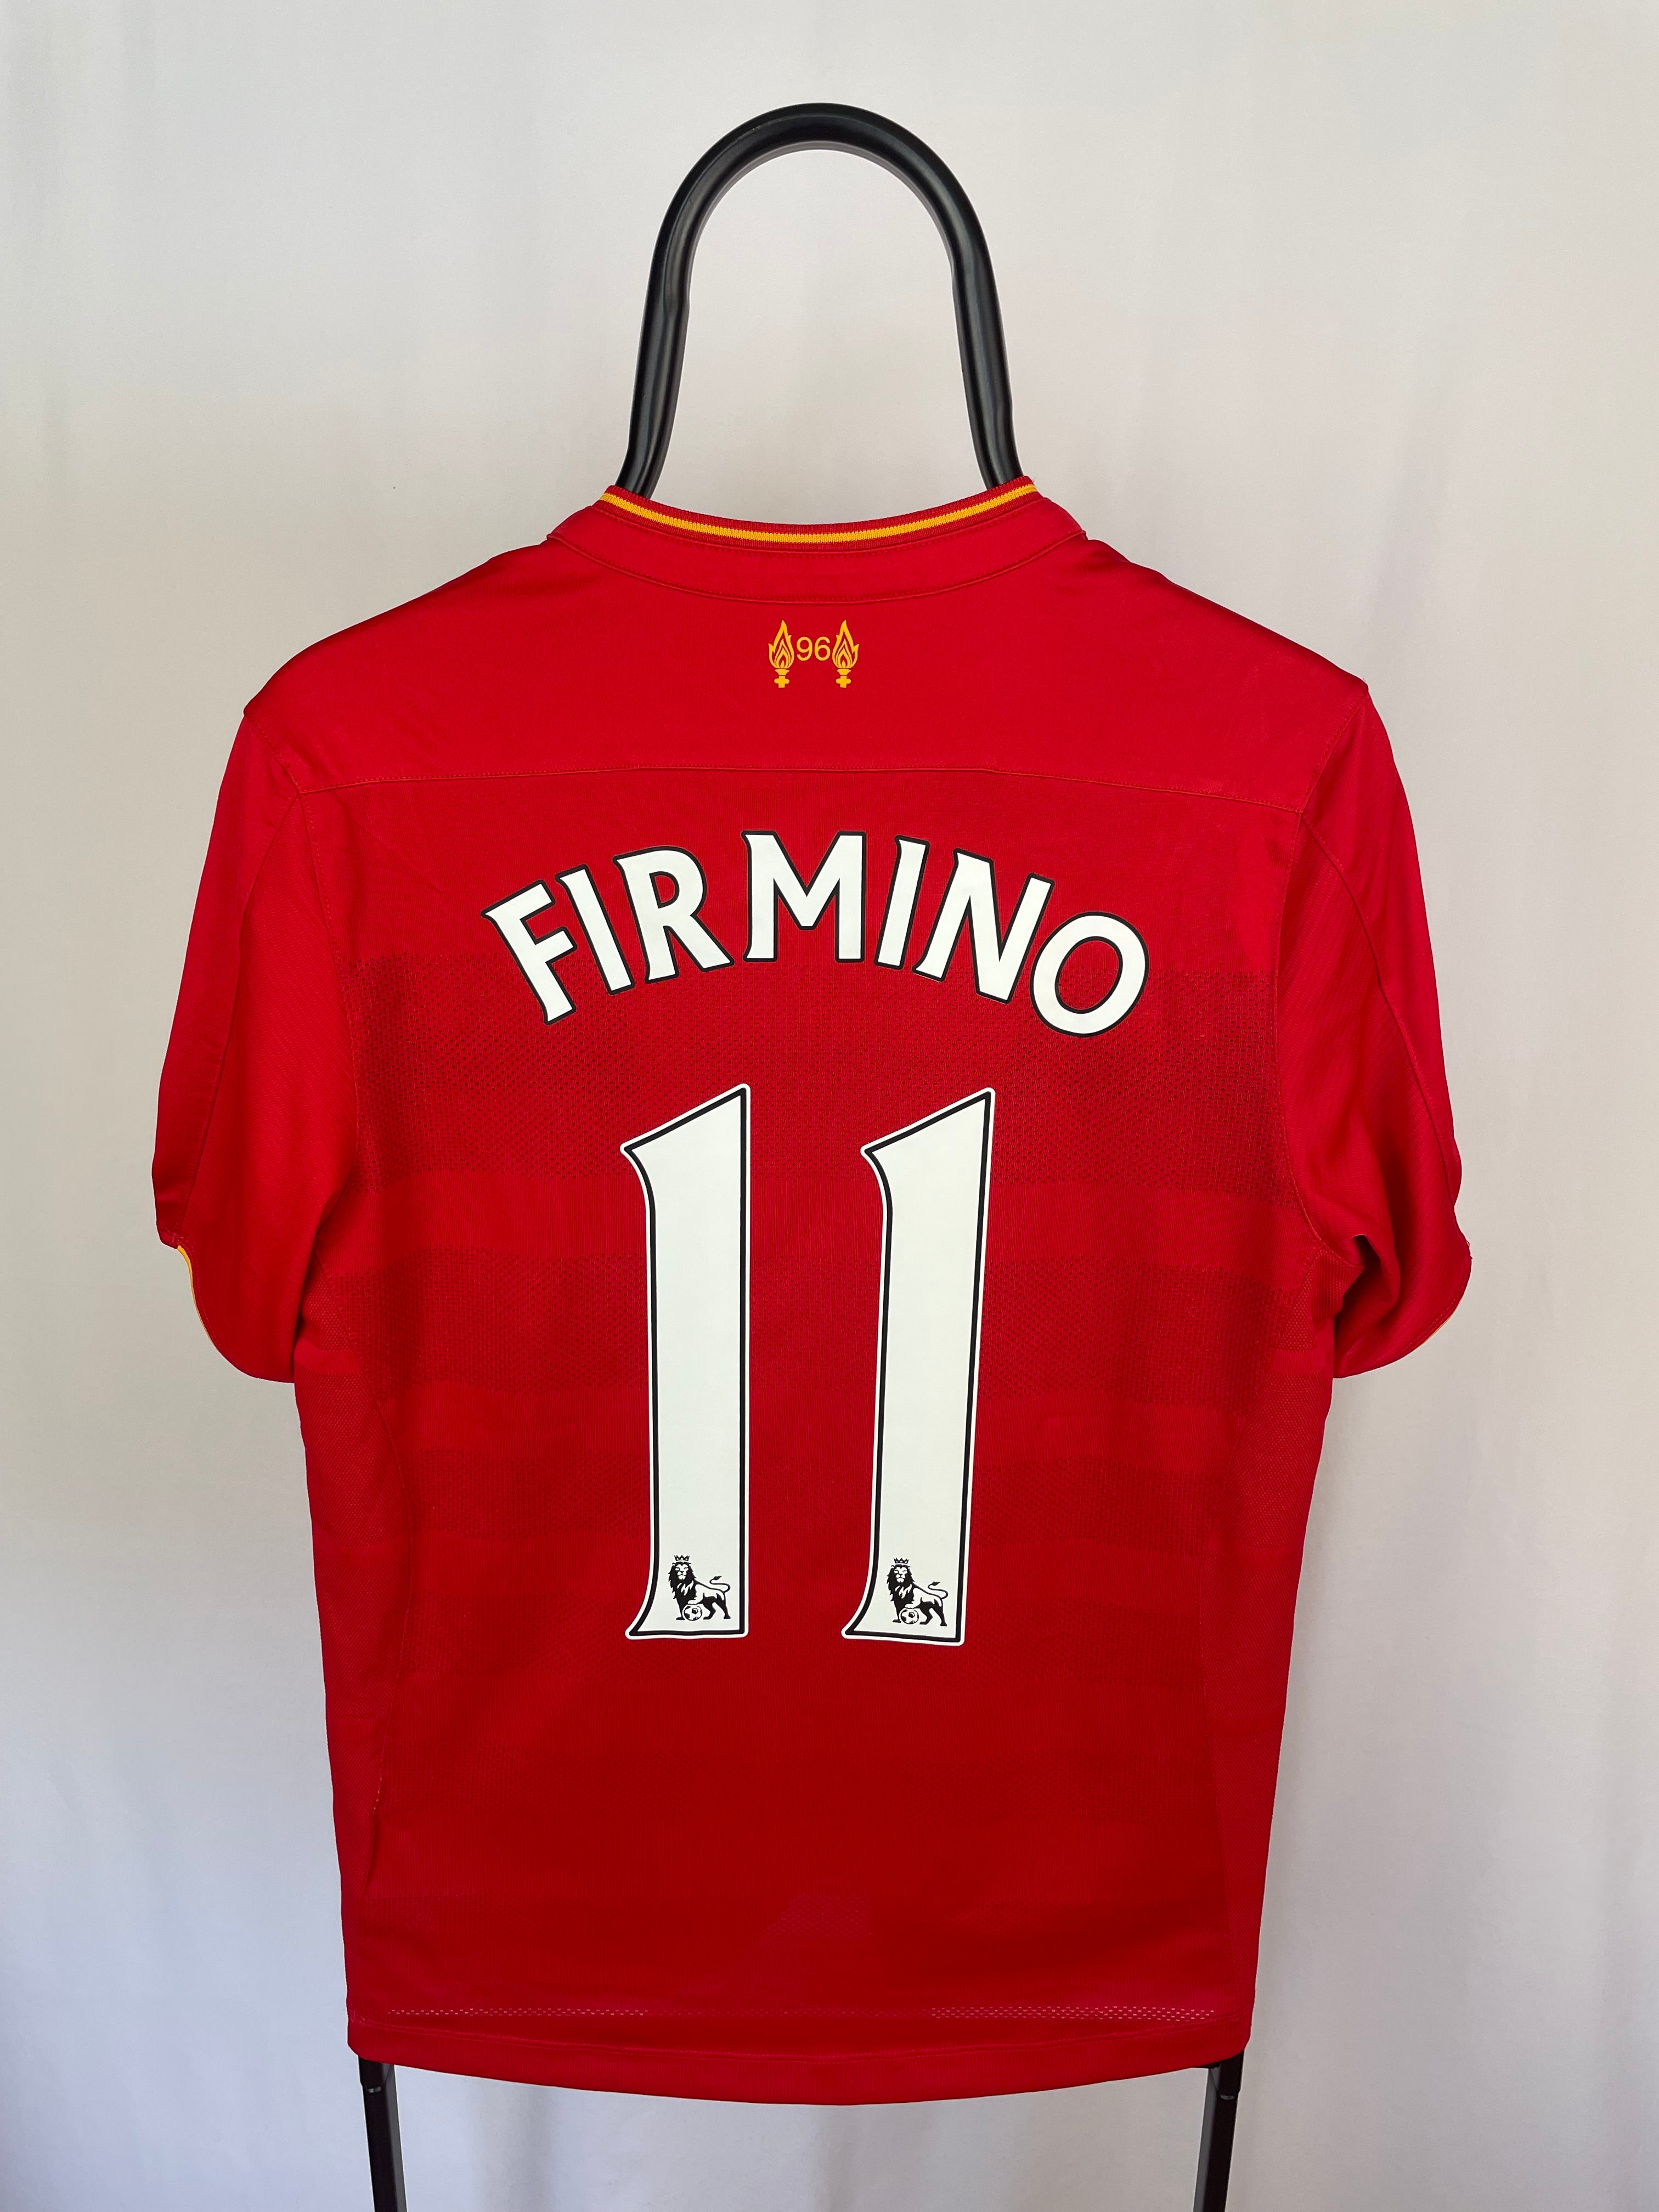 Roberto Firmino Liverpool 15/16 hjemmebanetrøje - S